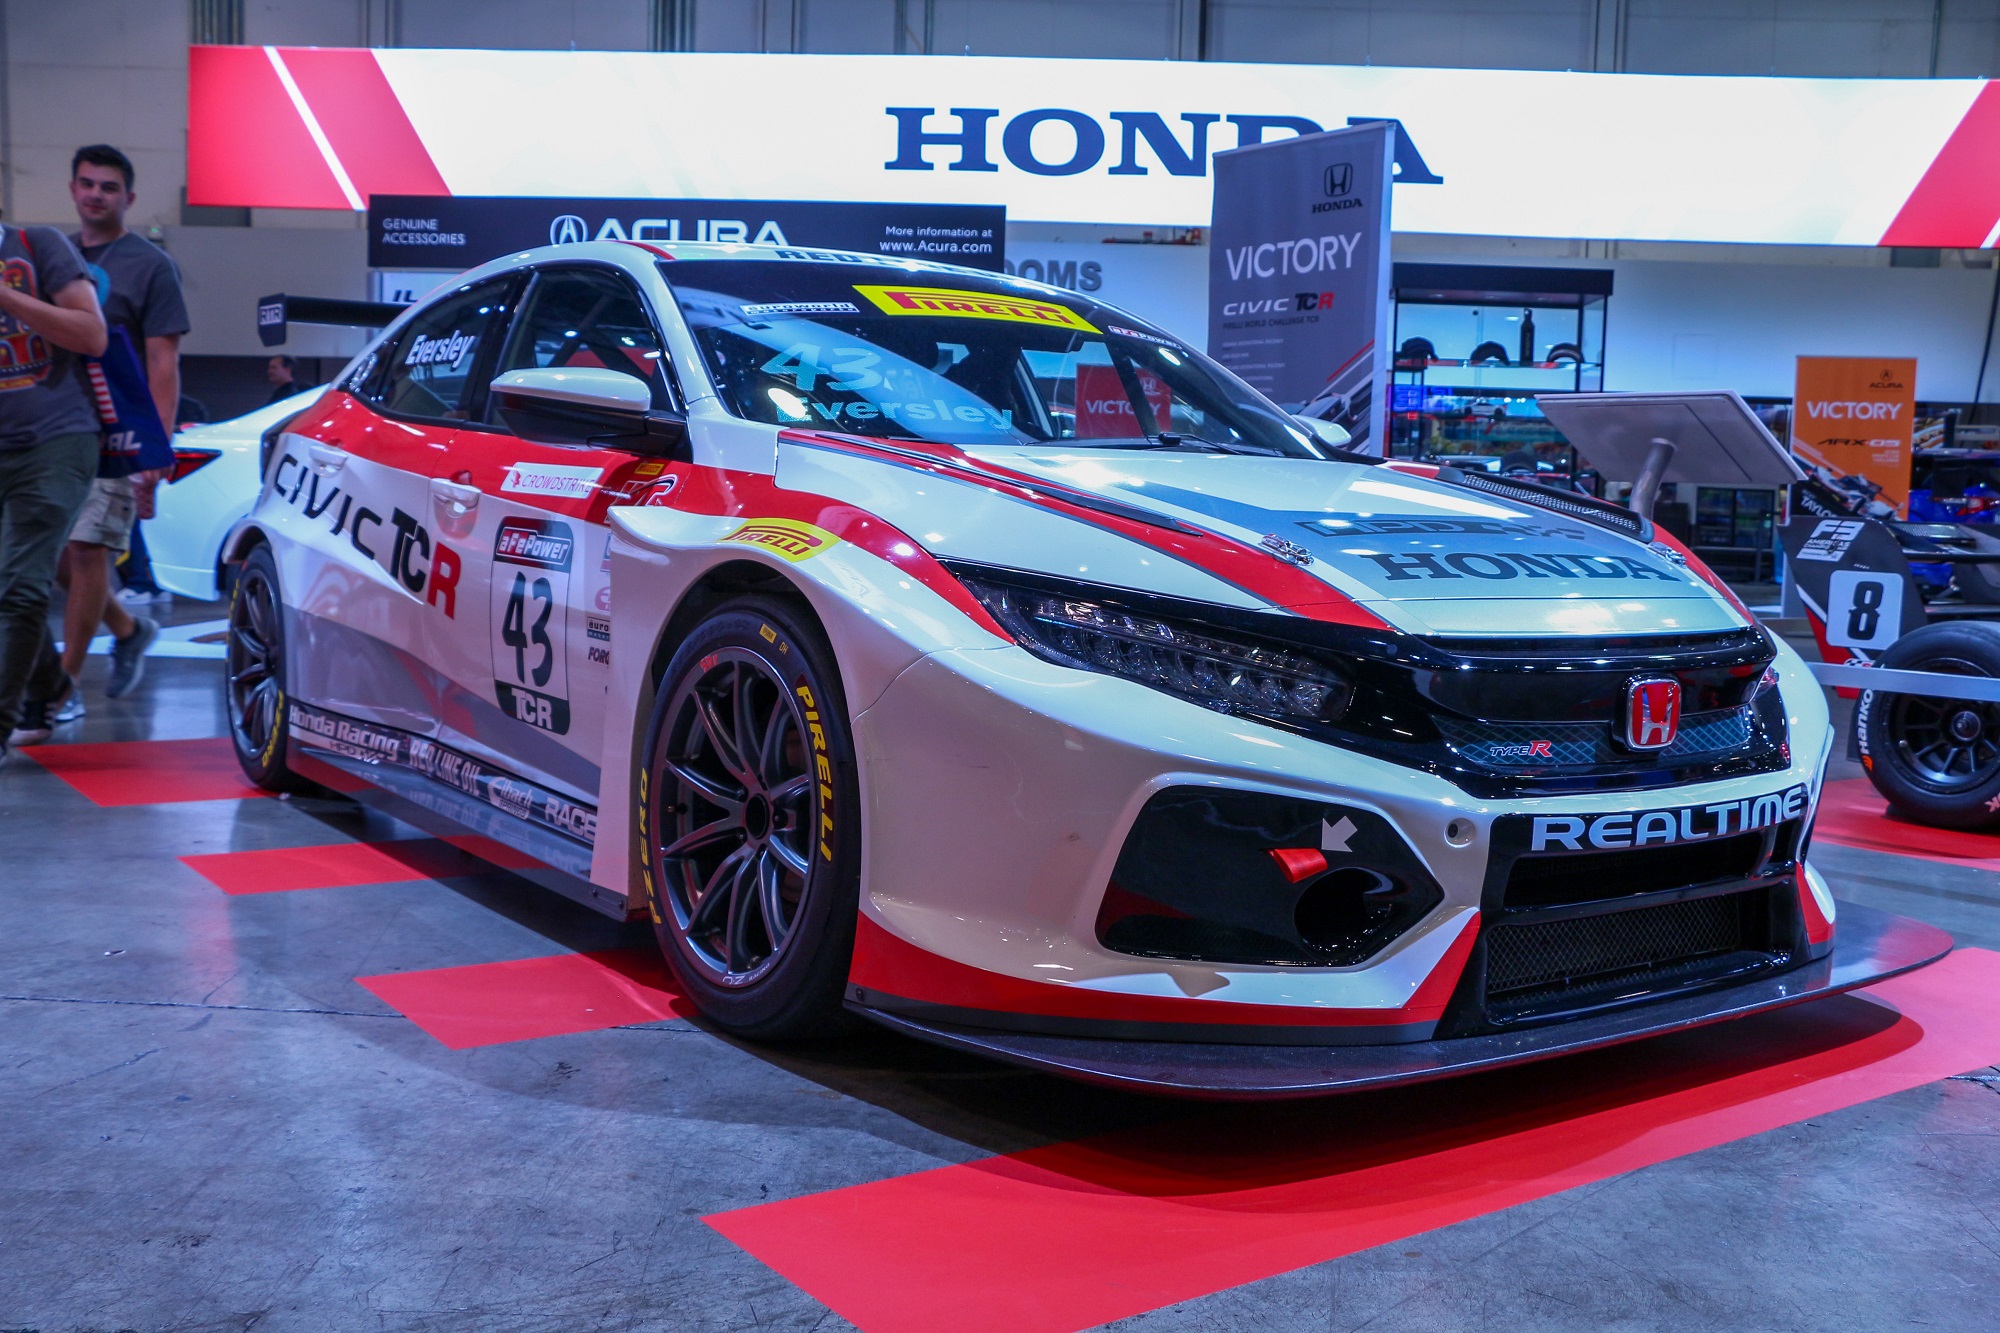 Honda Civic Type R TCR Formula 3 F3 RealTime Racing Insight SEMA 2018 Honda-tech.com